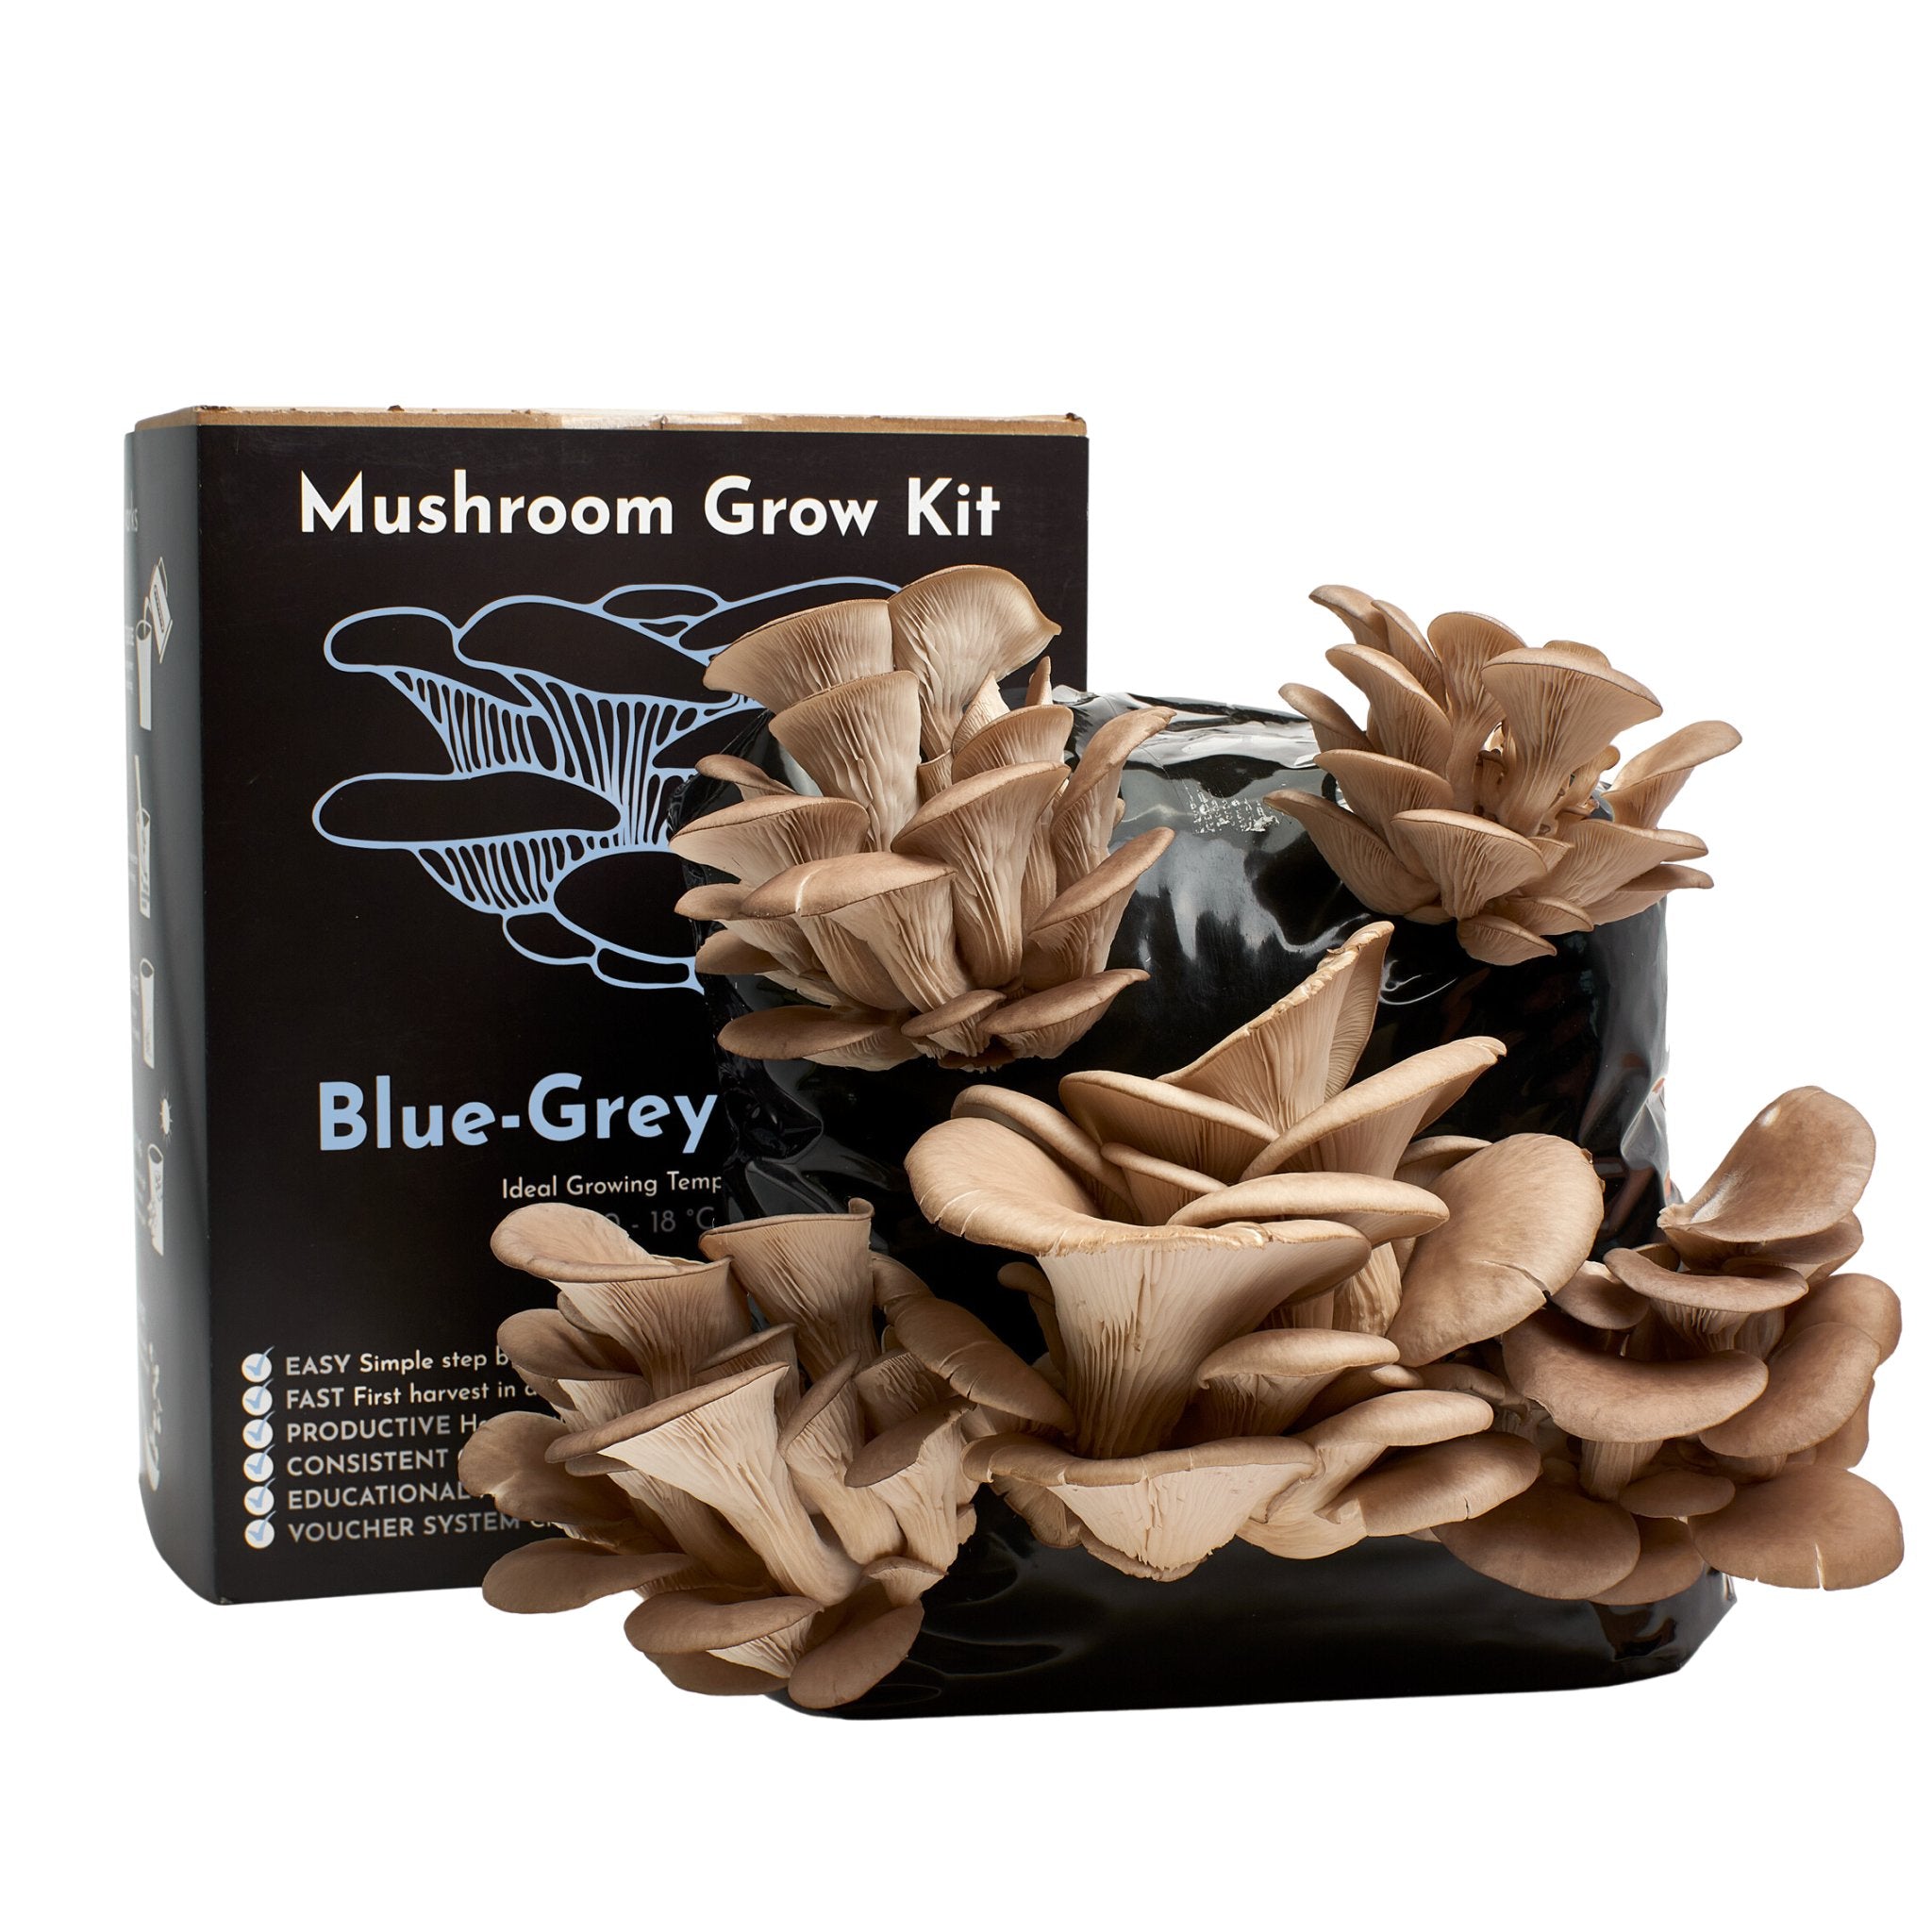 Mushroom Grow Kit | Urban Farm-It - grow urban. UK